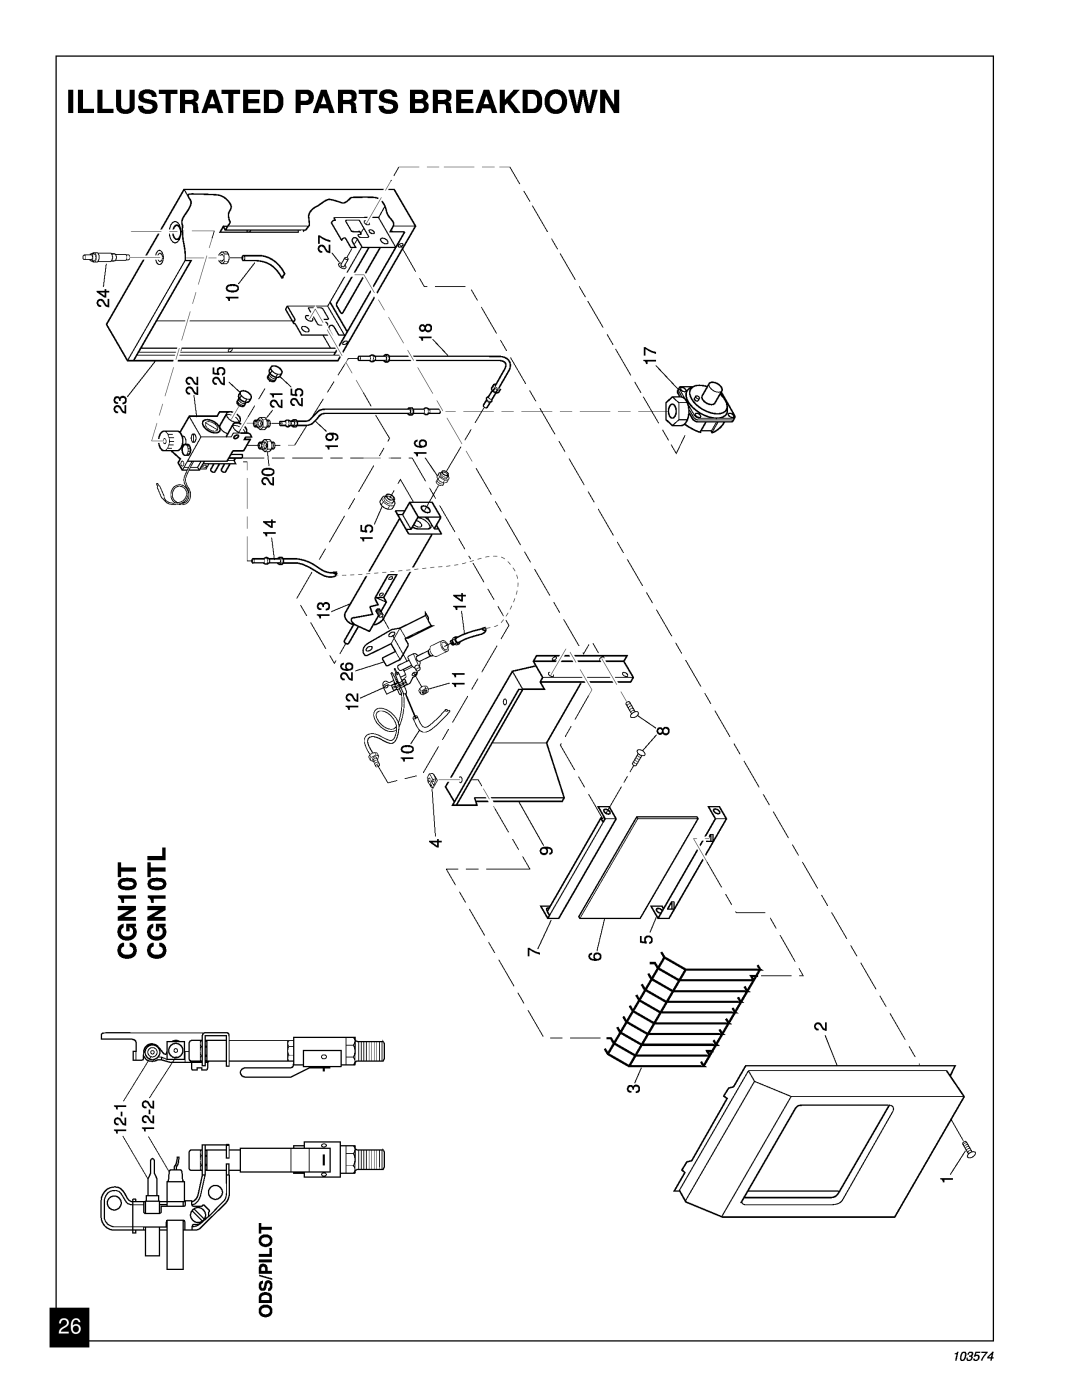 Desa Tech installation manual Breakdown, CGN10TL, Parts, Illustrated 